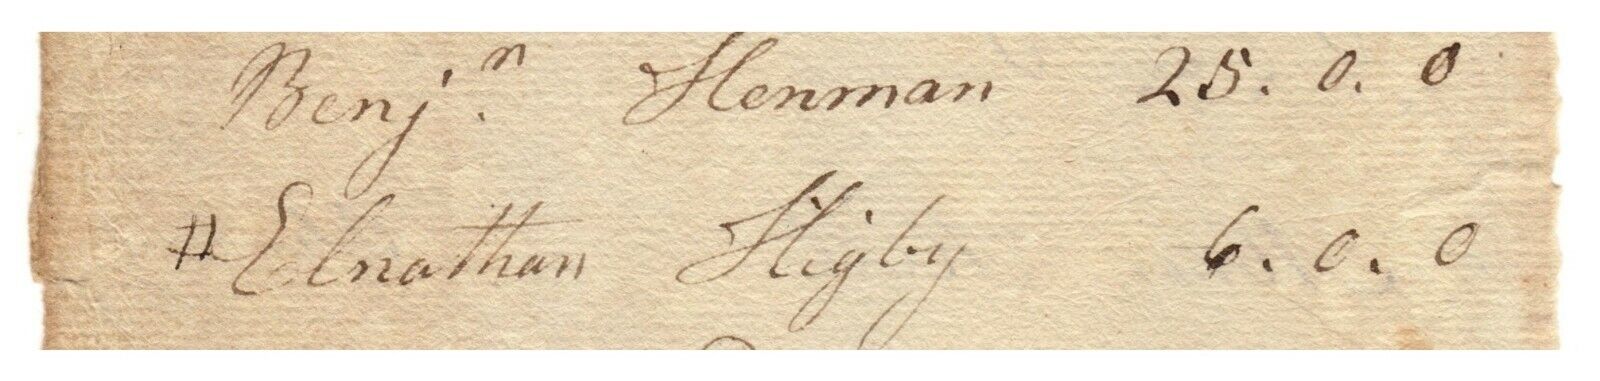 RARE Autograph Document Handwritten by Ethan Allen - Captured Fort Ticonderoga